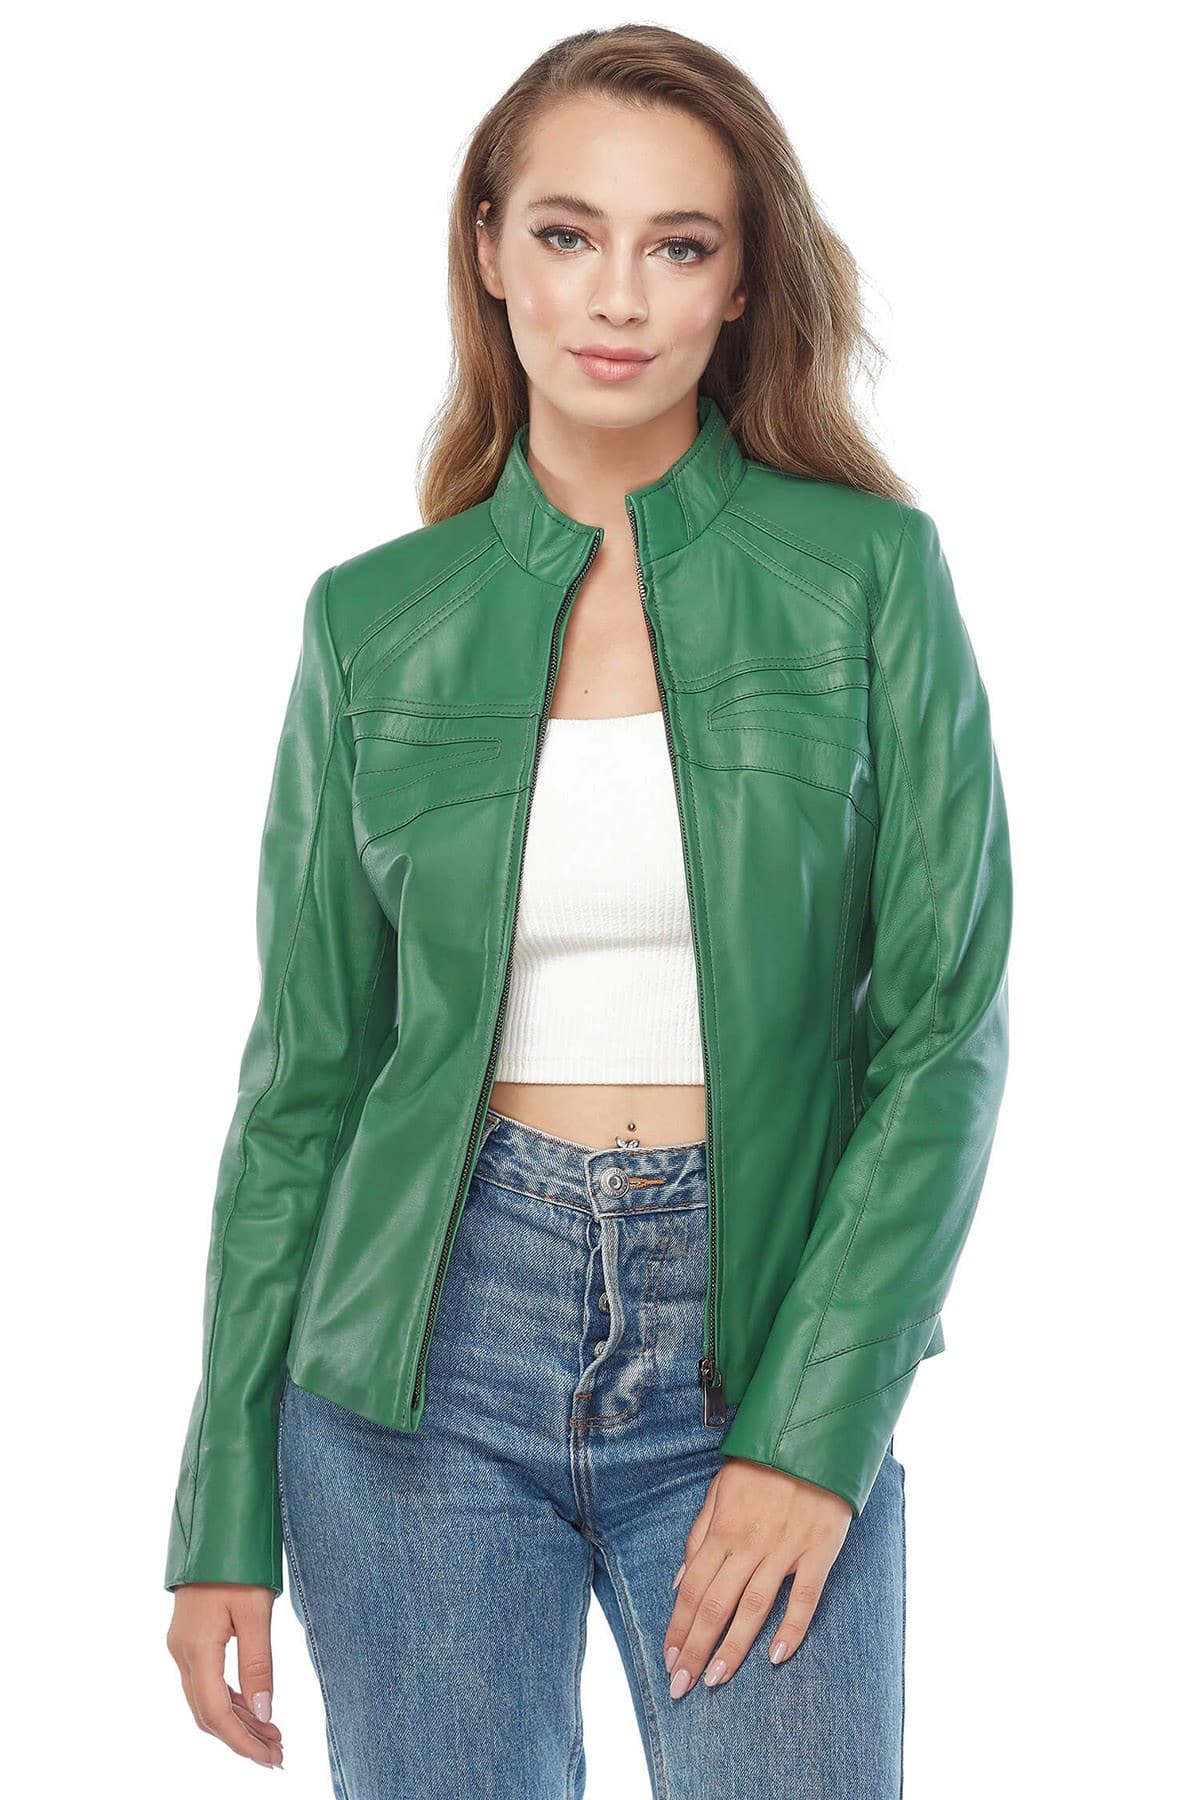 Amanda Griffin Green Leather Jacket Pose